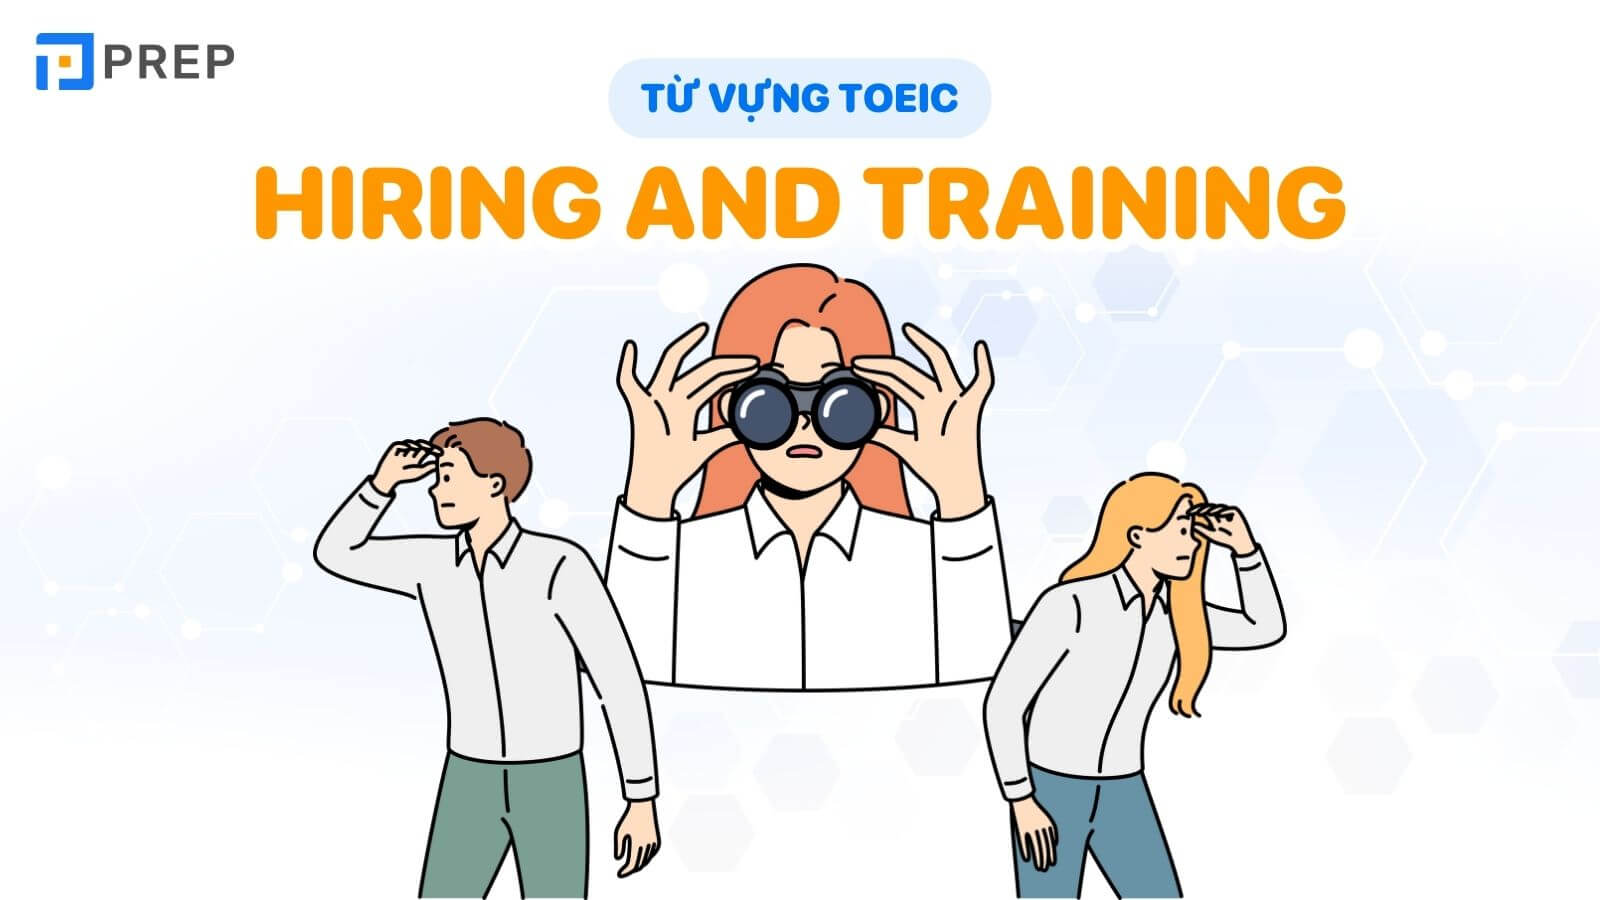 tu-vung-toeic-chu-de-hiring-and-training.jpg